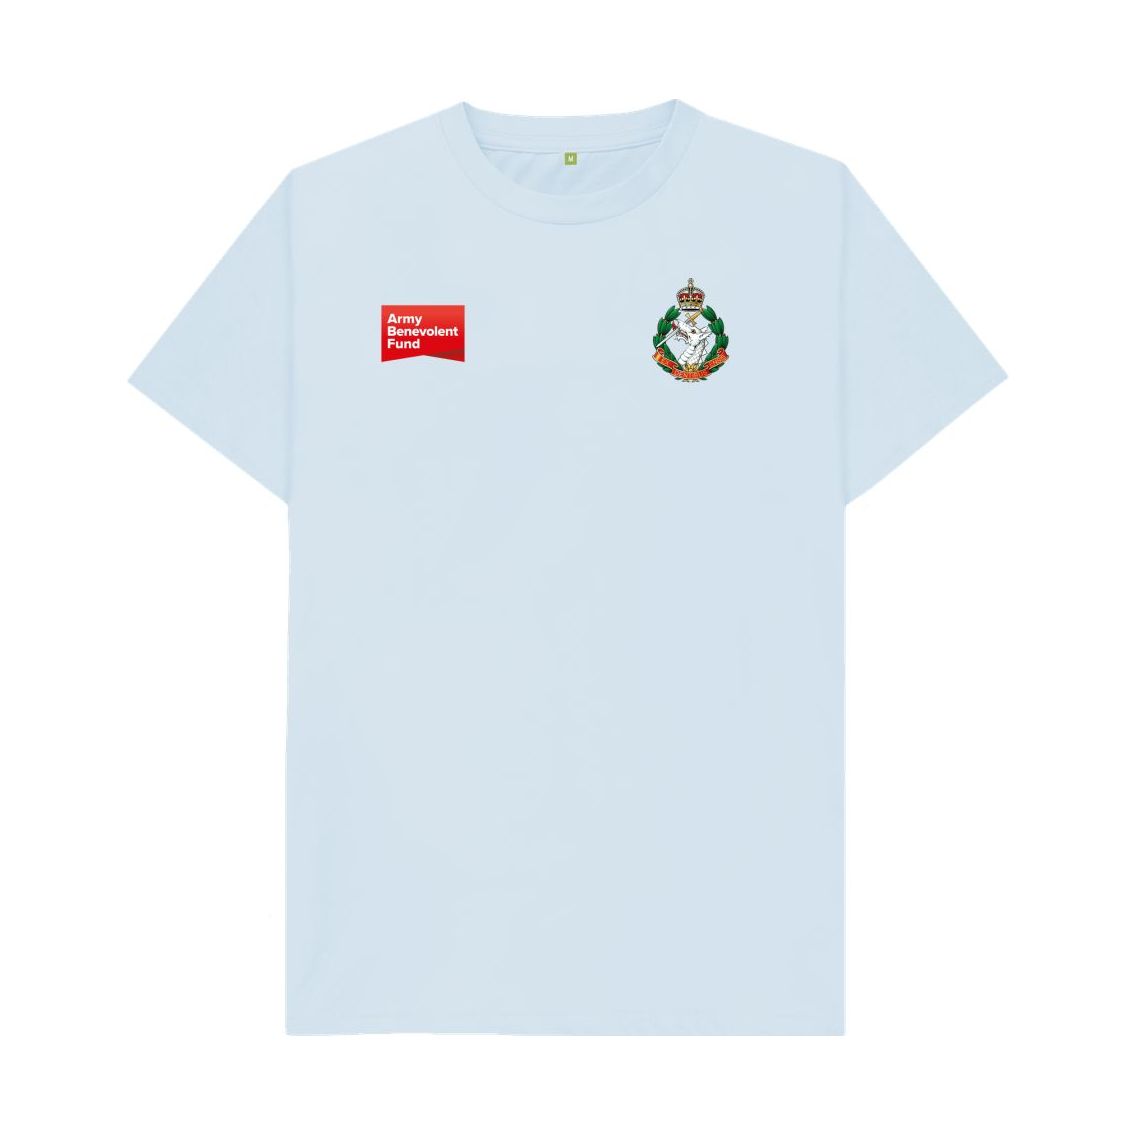 Royal Army Dental Corps Unisex T-shirt - Army Benevolent Fund